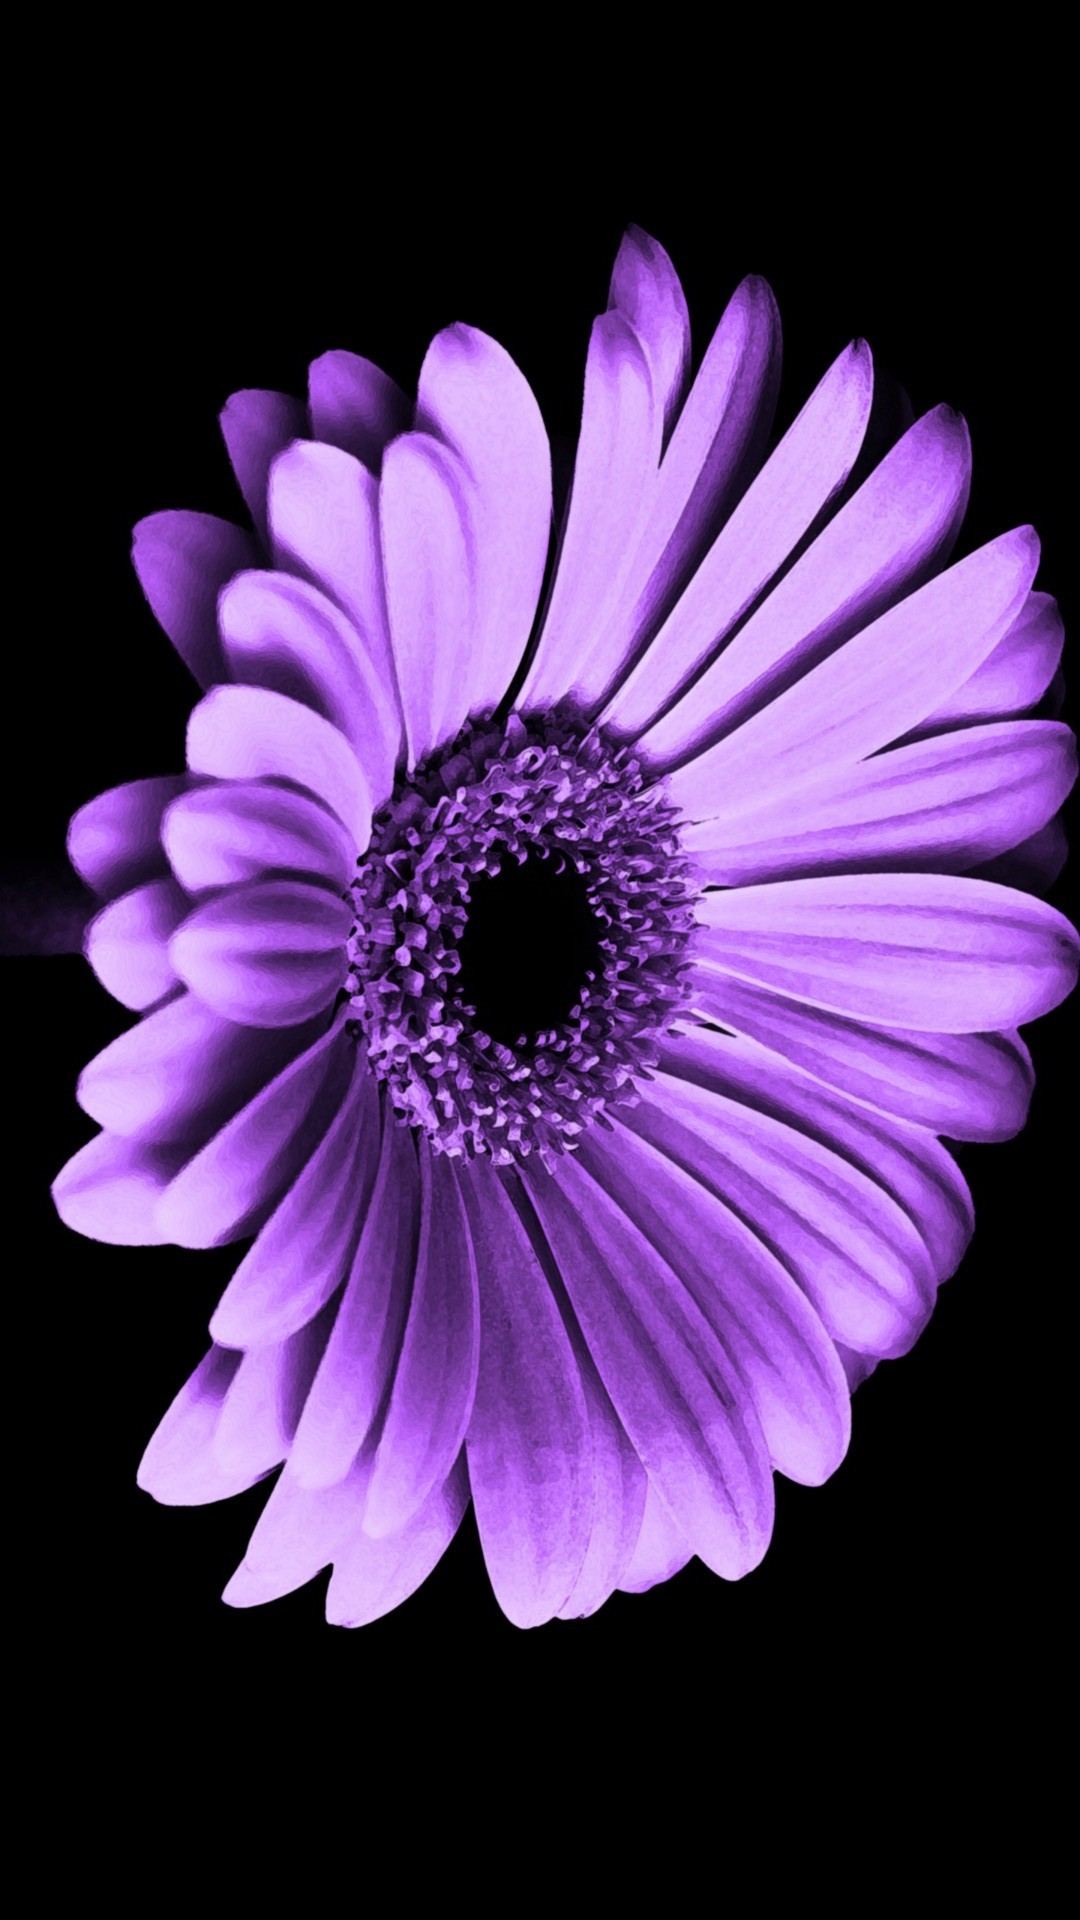 1080x1920 Violet Daisy Flower iPhone Wallpaper resolution 